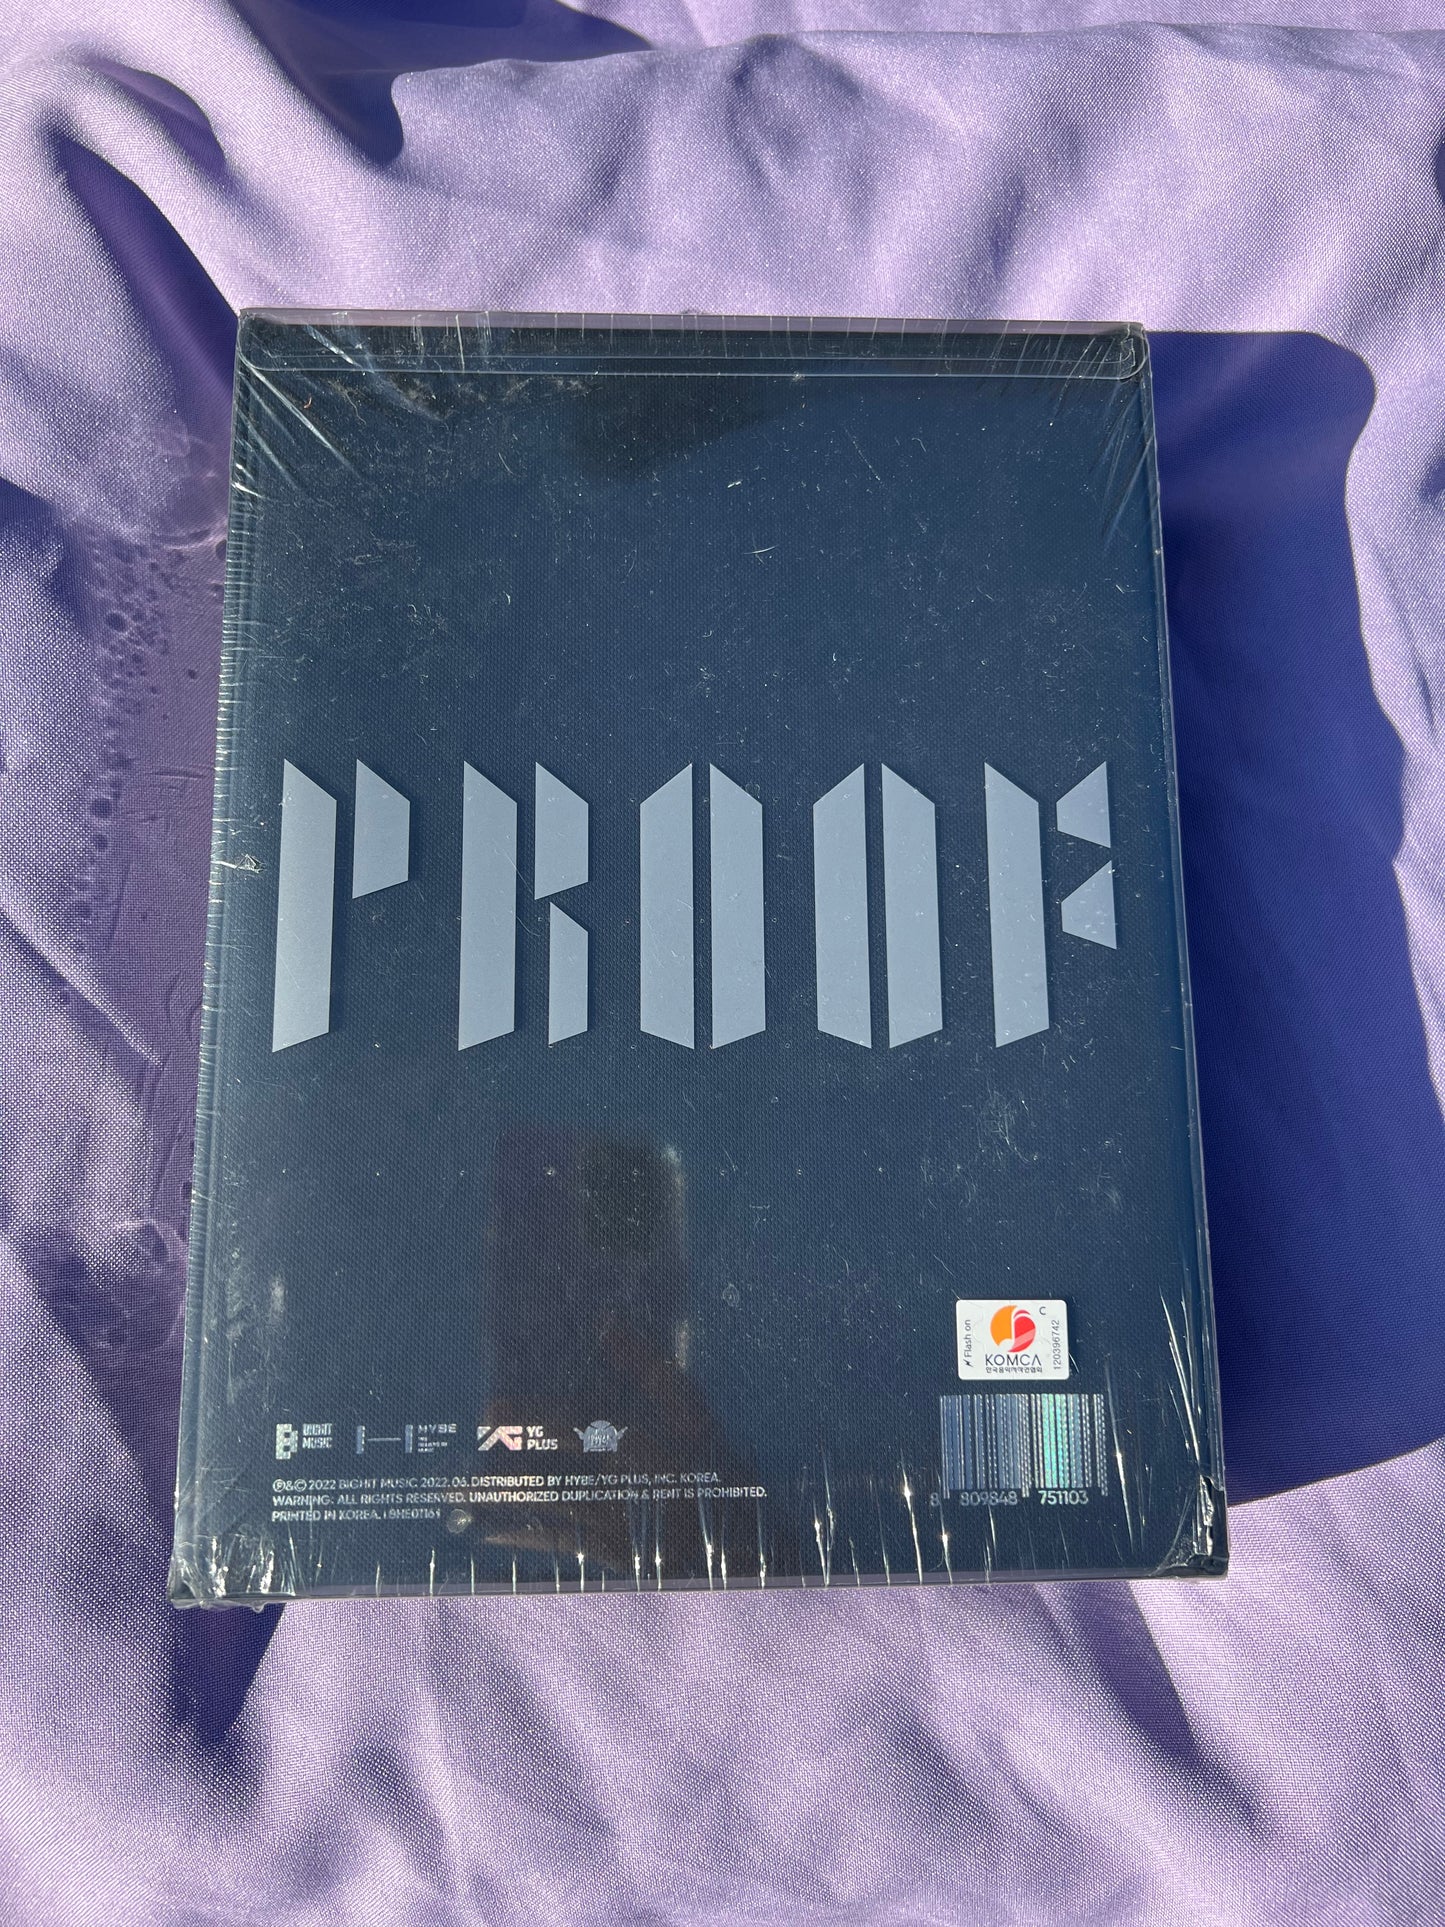 BTS - Proof (CD) (Standard Edition)